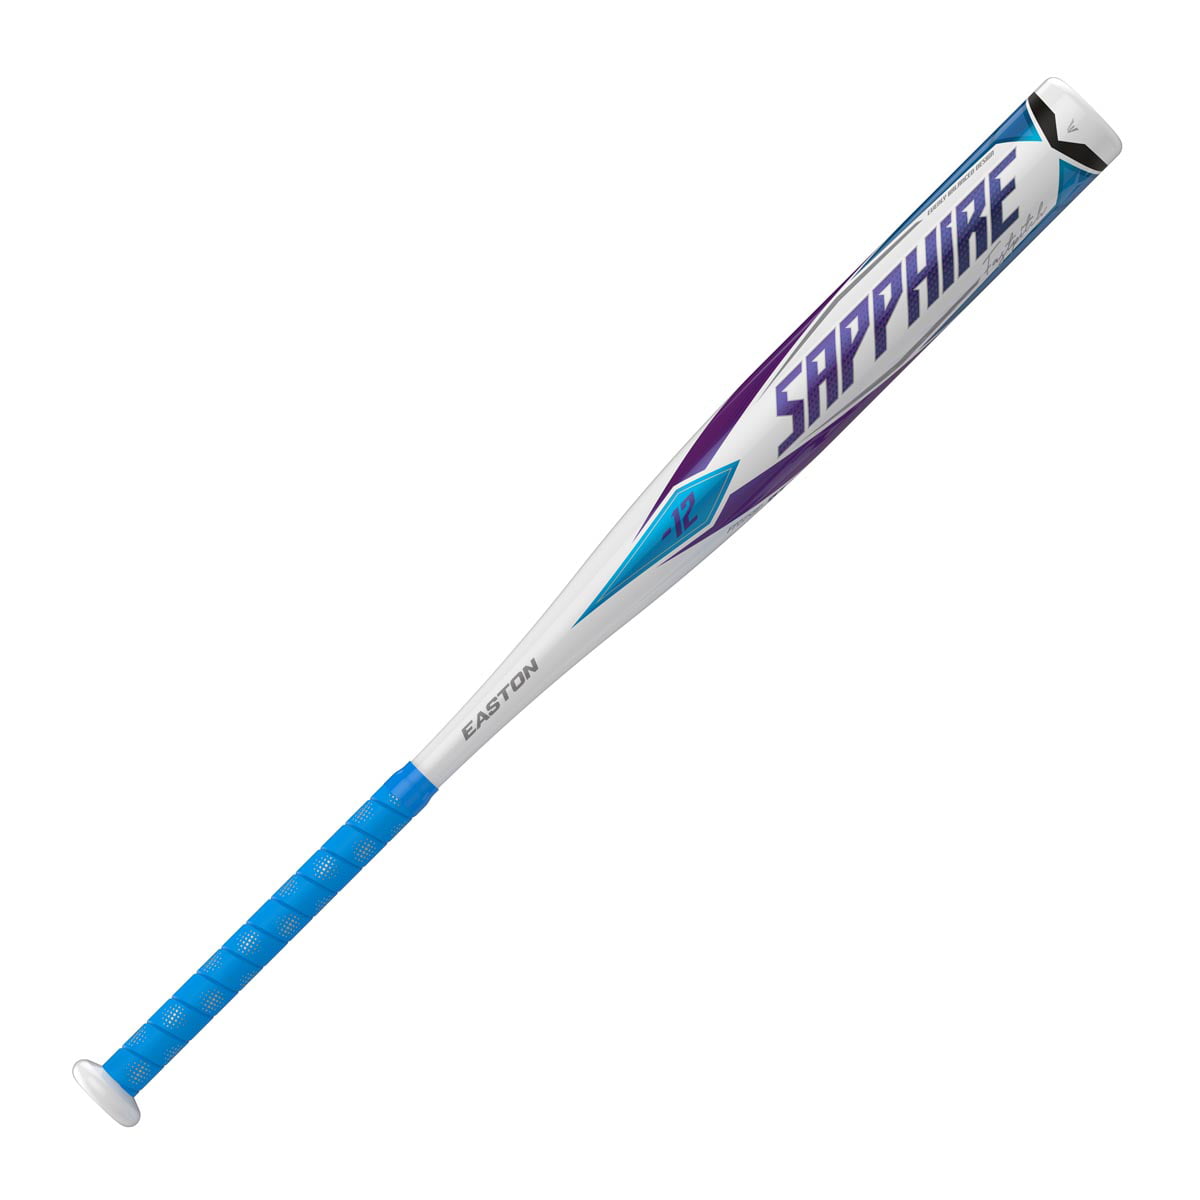 Louisville Slugger and Easton Softball Bats New Never Used 